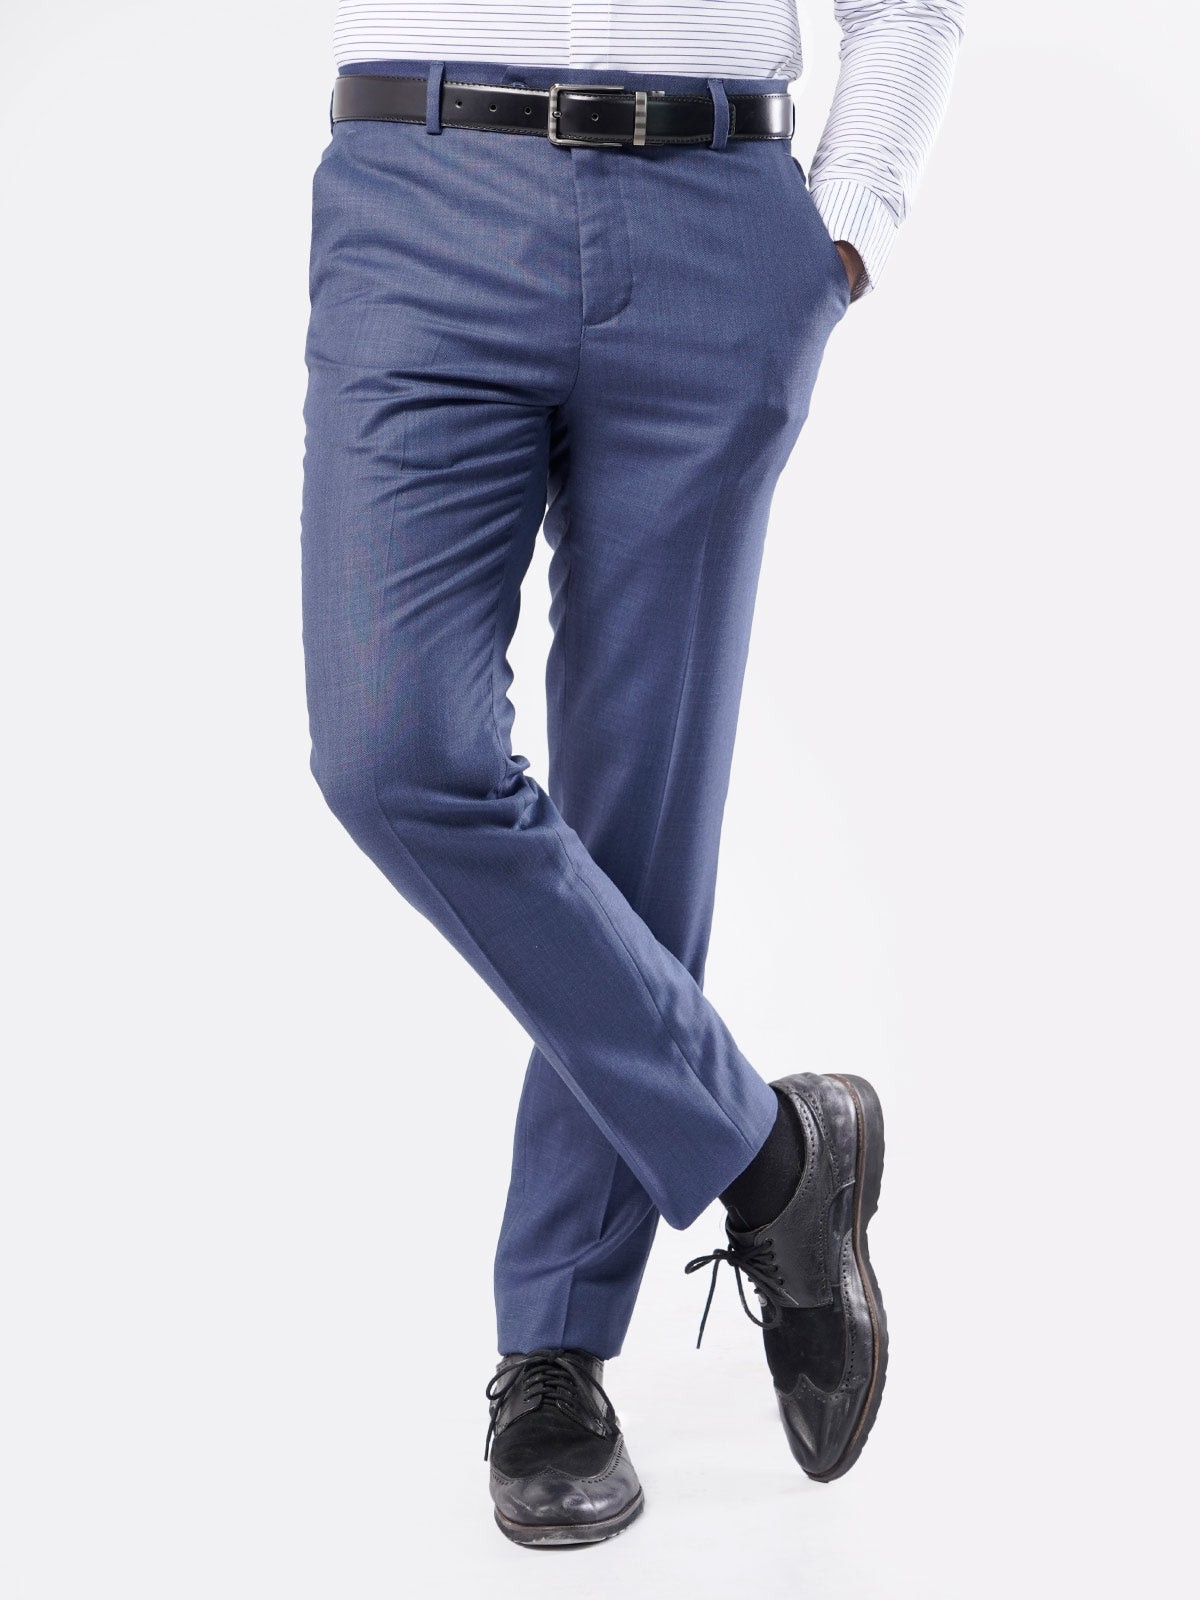 Blue Self Executive Formal Dress Trouser (FDT-048)